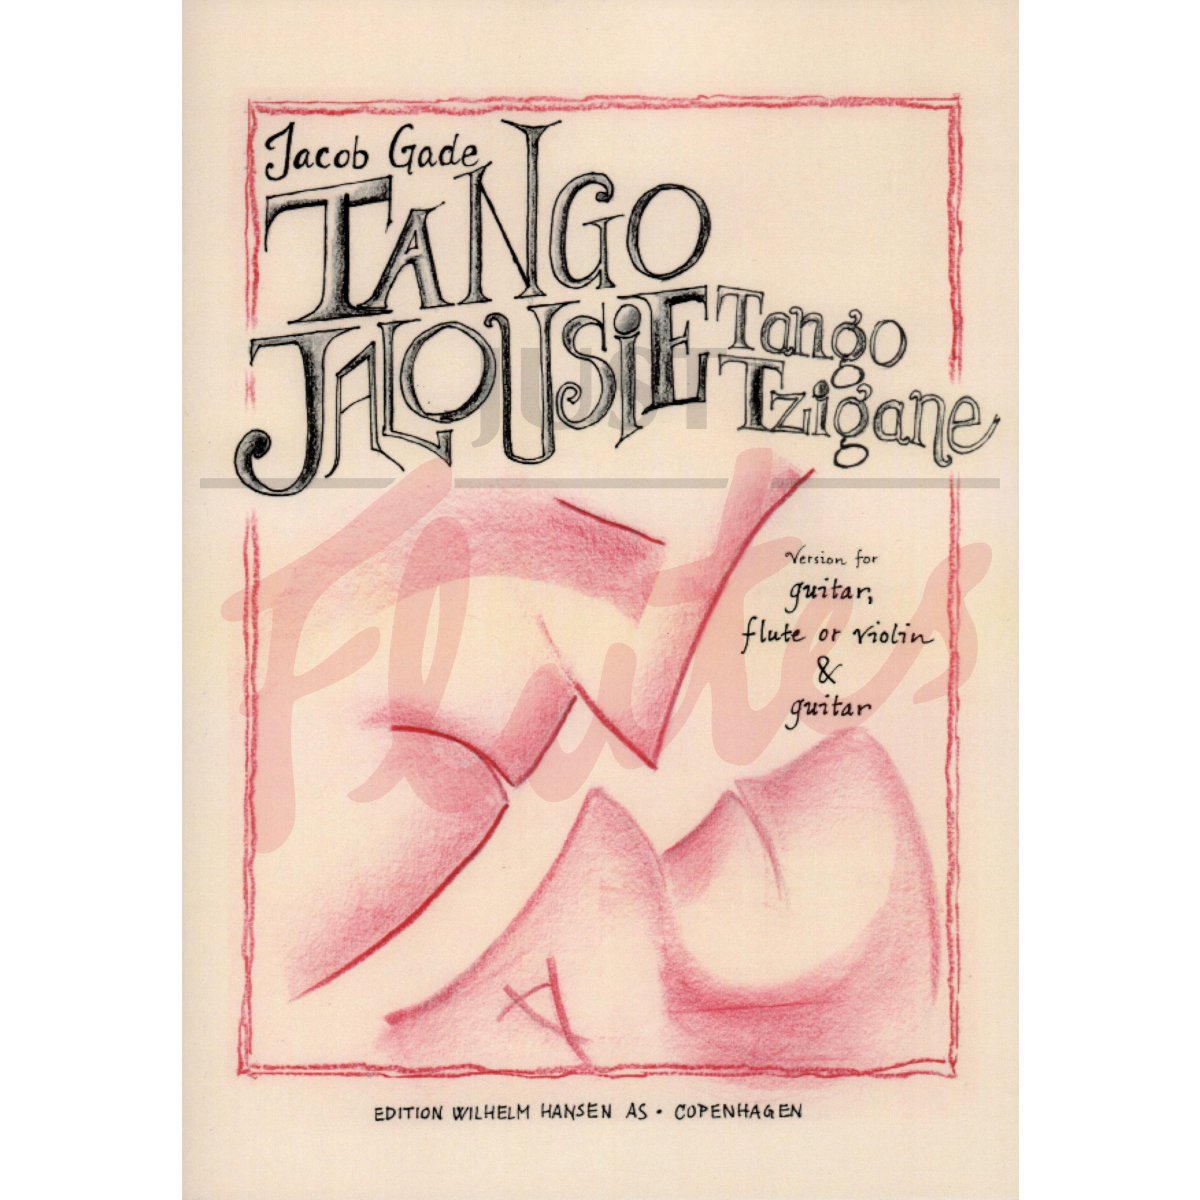 Tango Jalousie: Tango Tzigane for Flute and Guitar